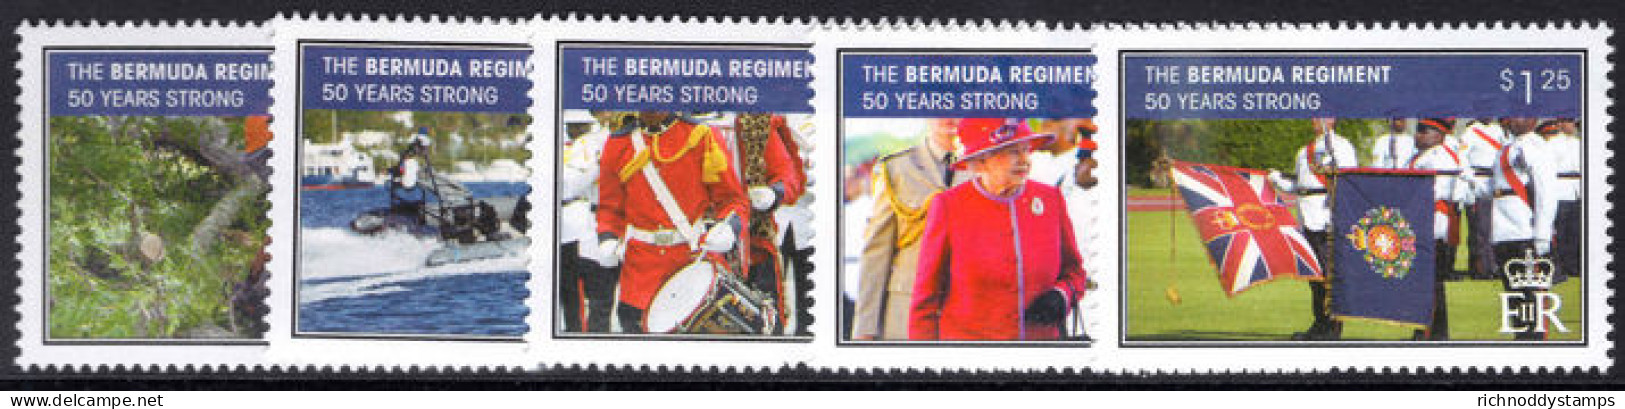 Bermuda 2015 Bermuda Regiment Unmounted Mint. - Bermuda